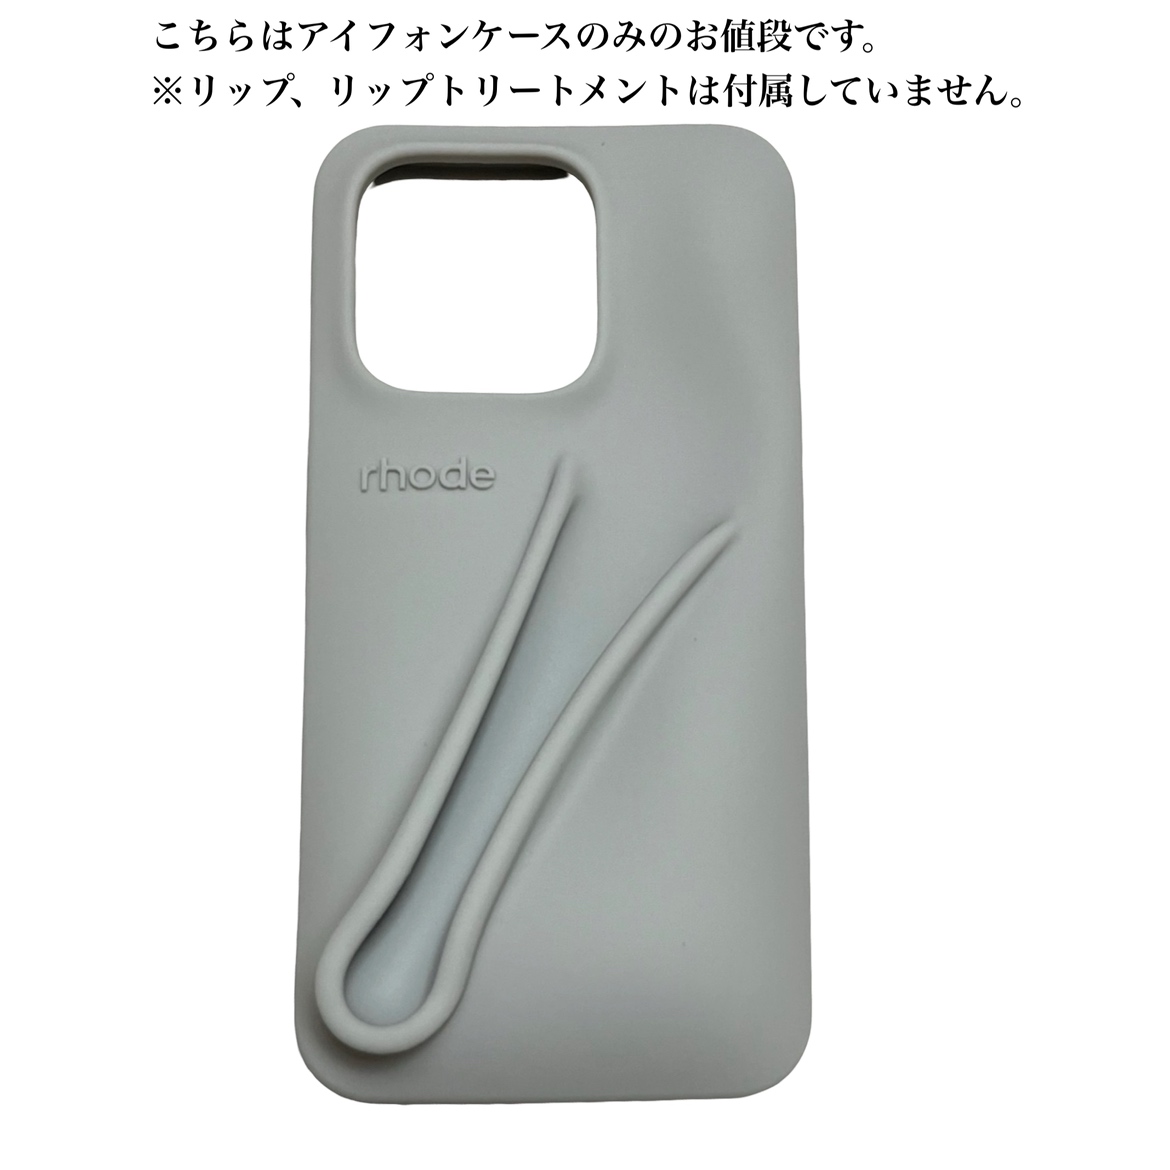 rhode ヘイリービーバー iPhoneケース」rhode skin(ロードスキン 